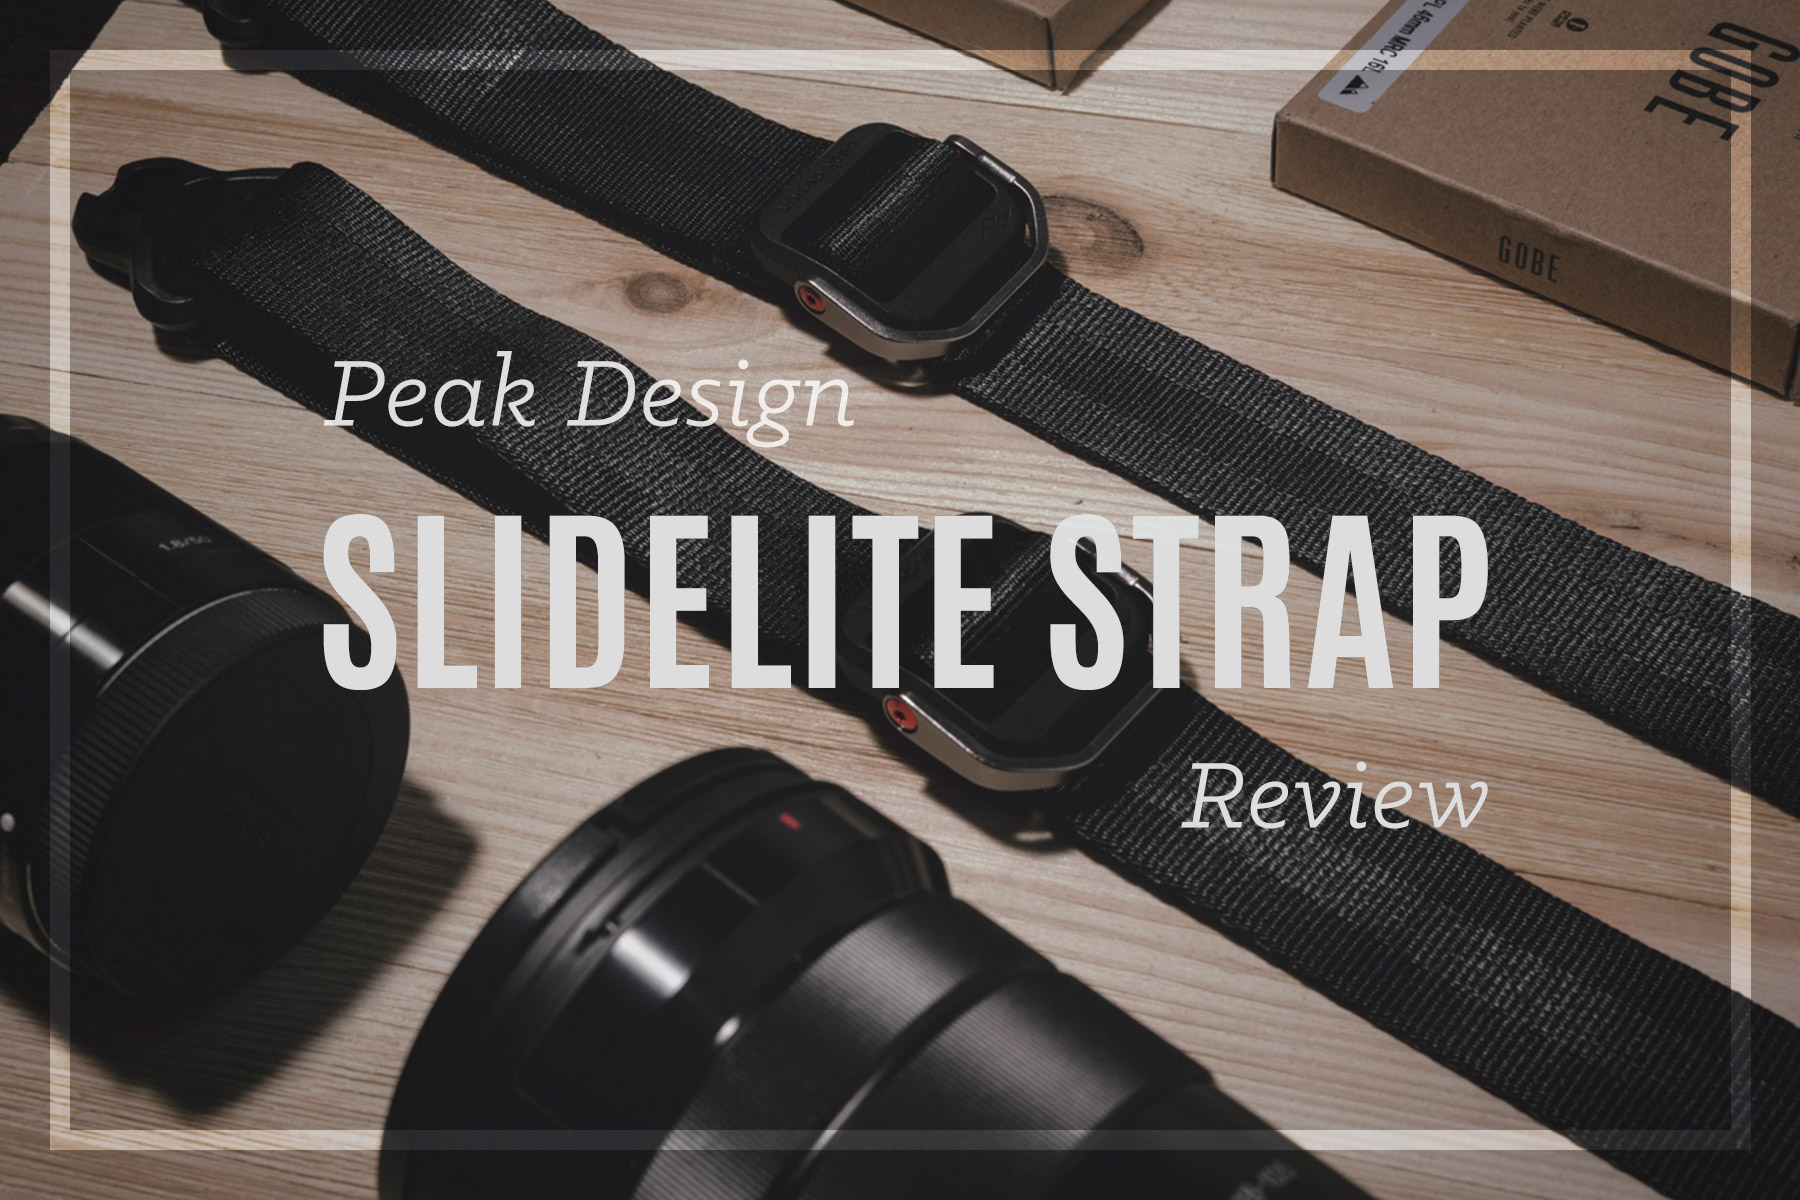 Peak Design SlideLITE Review